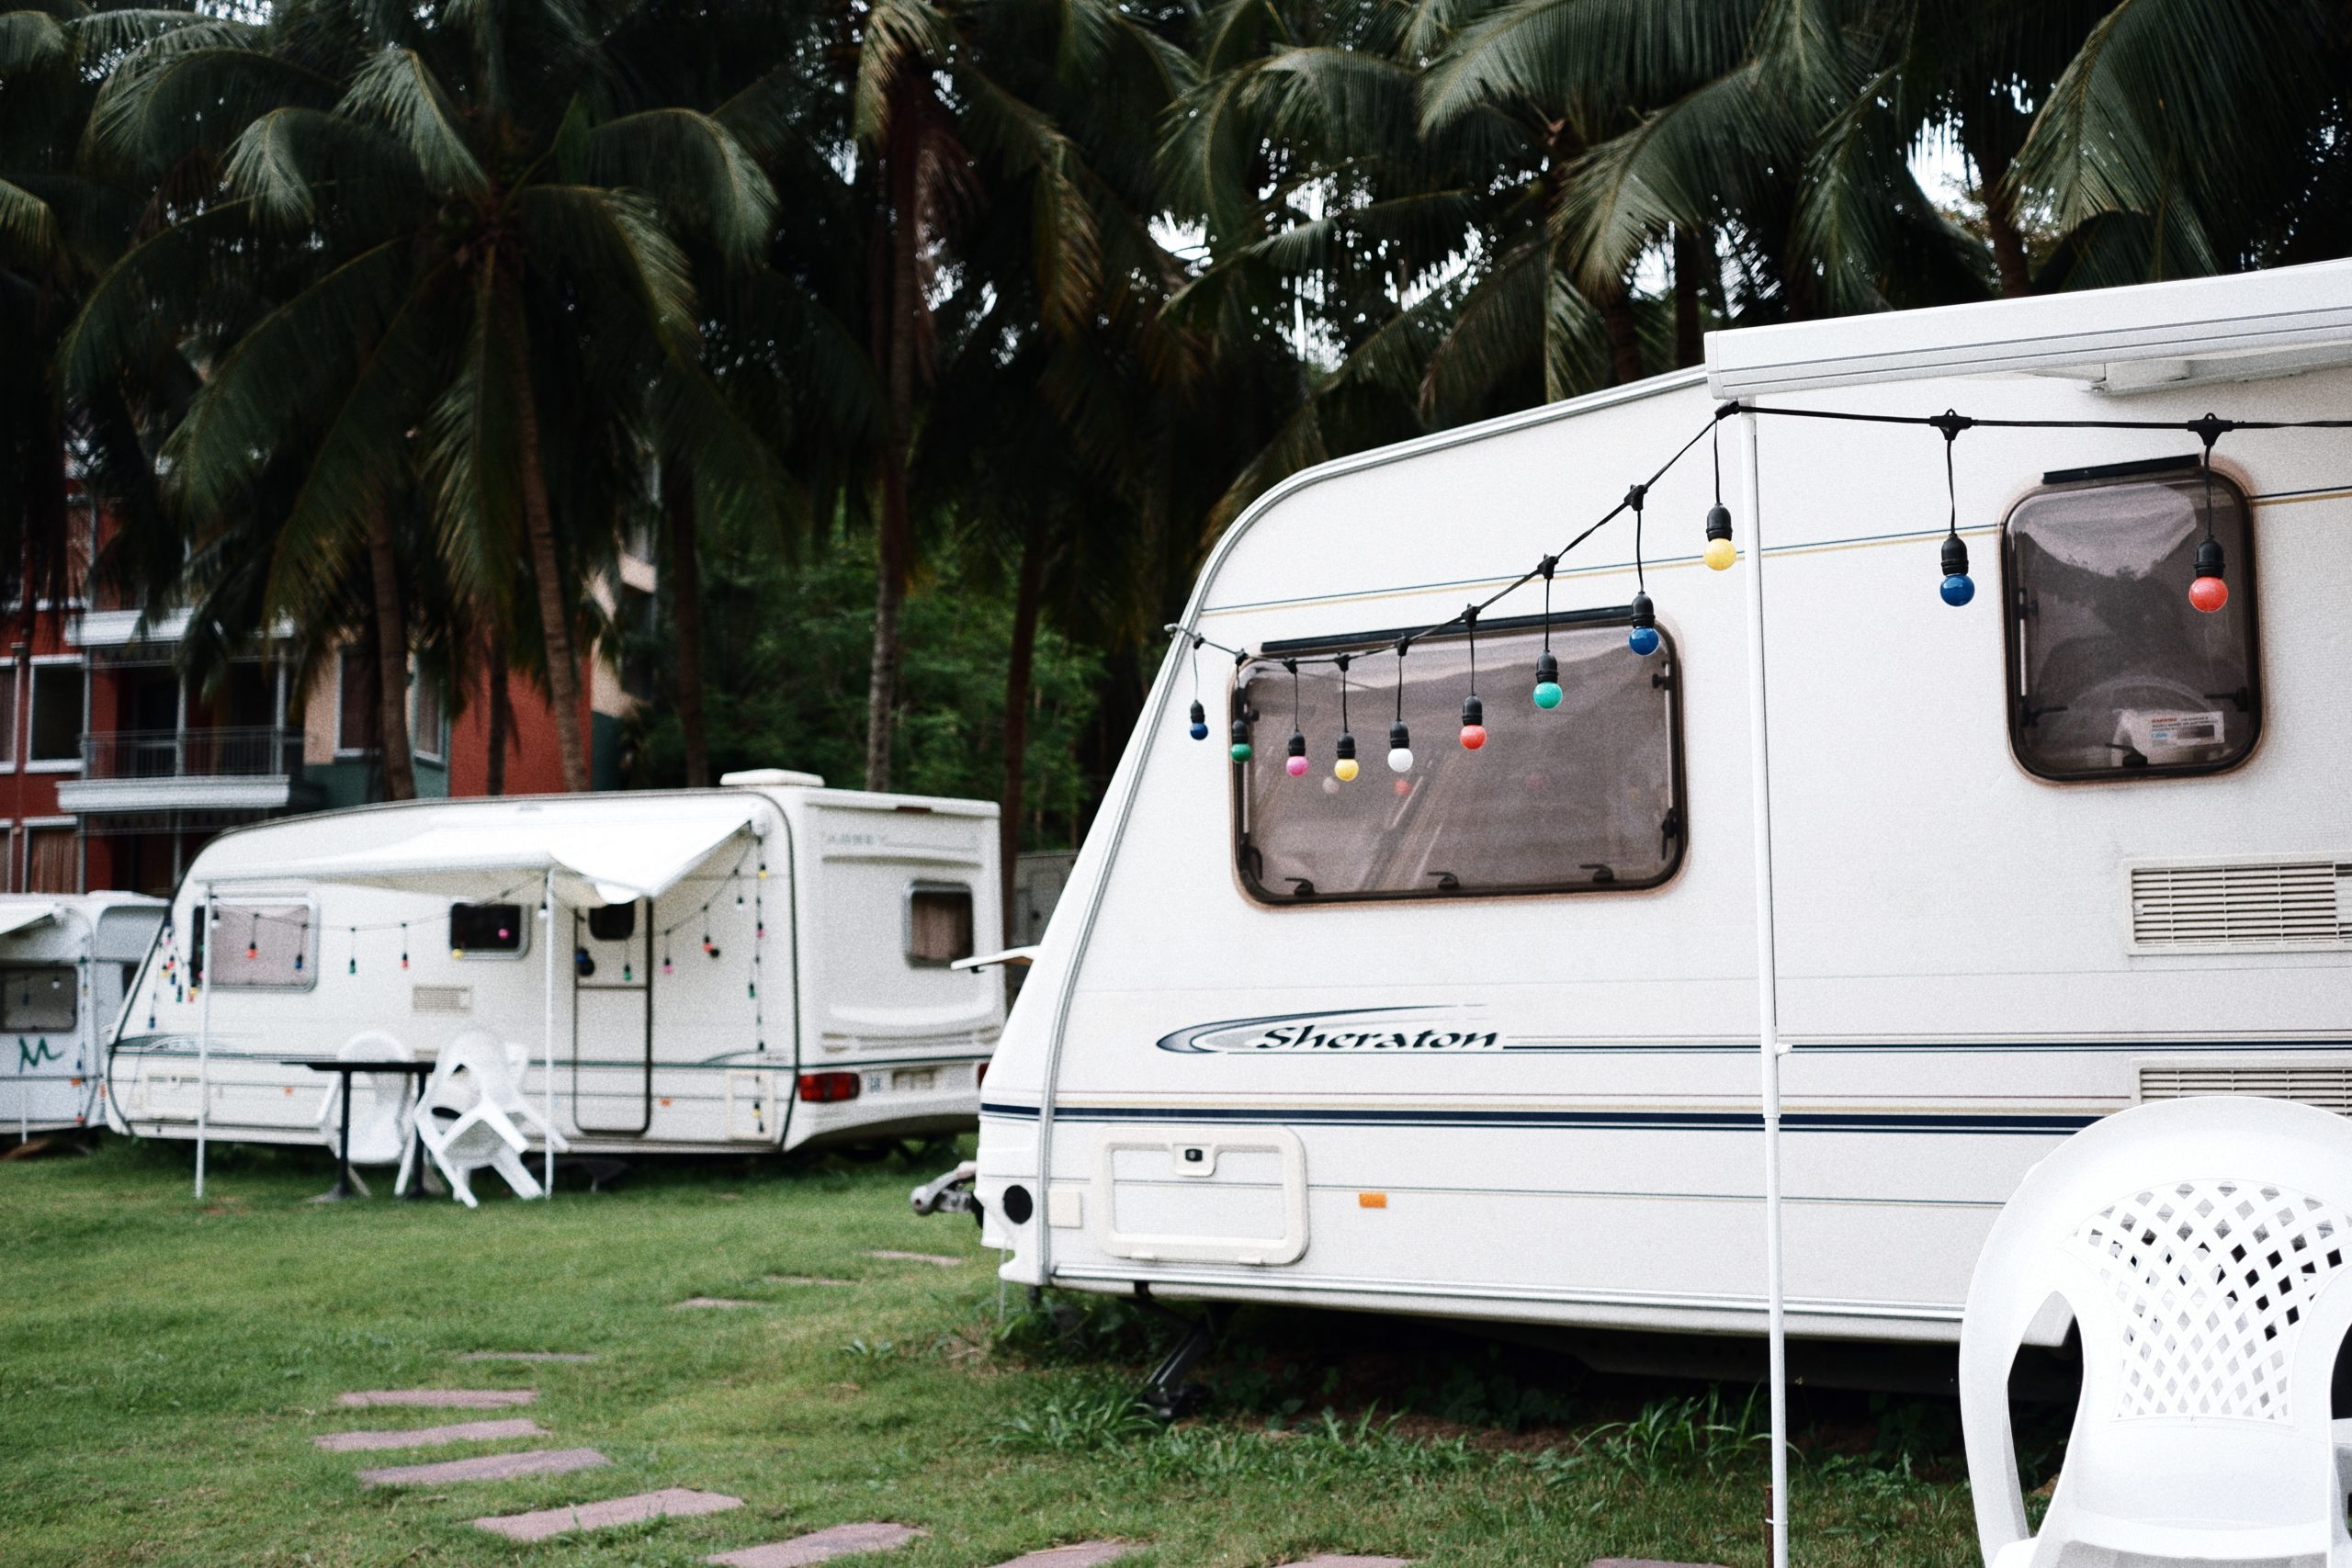 Caravans in situ at a caravan park